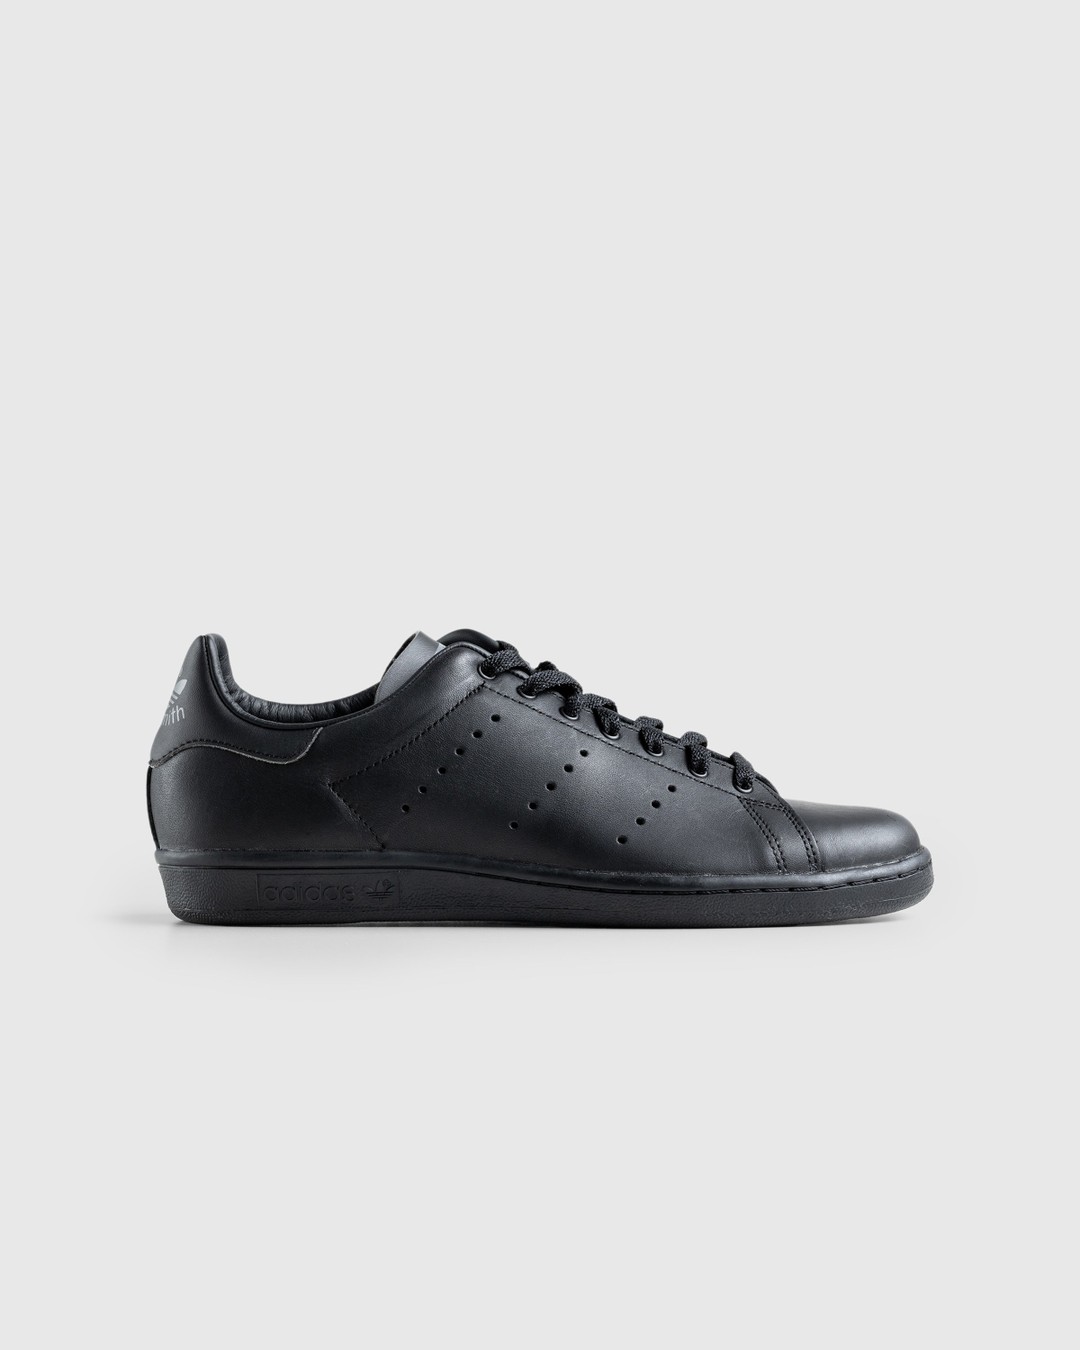 stadig Undvigende arkiv Adidas – Stan Smith 80s Black | Highsnobiety Shop